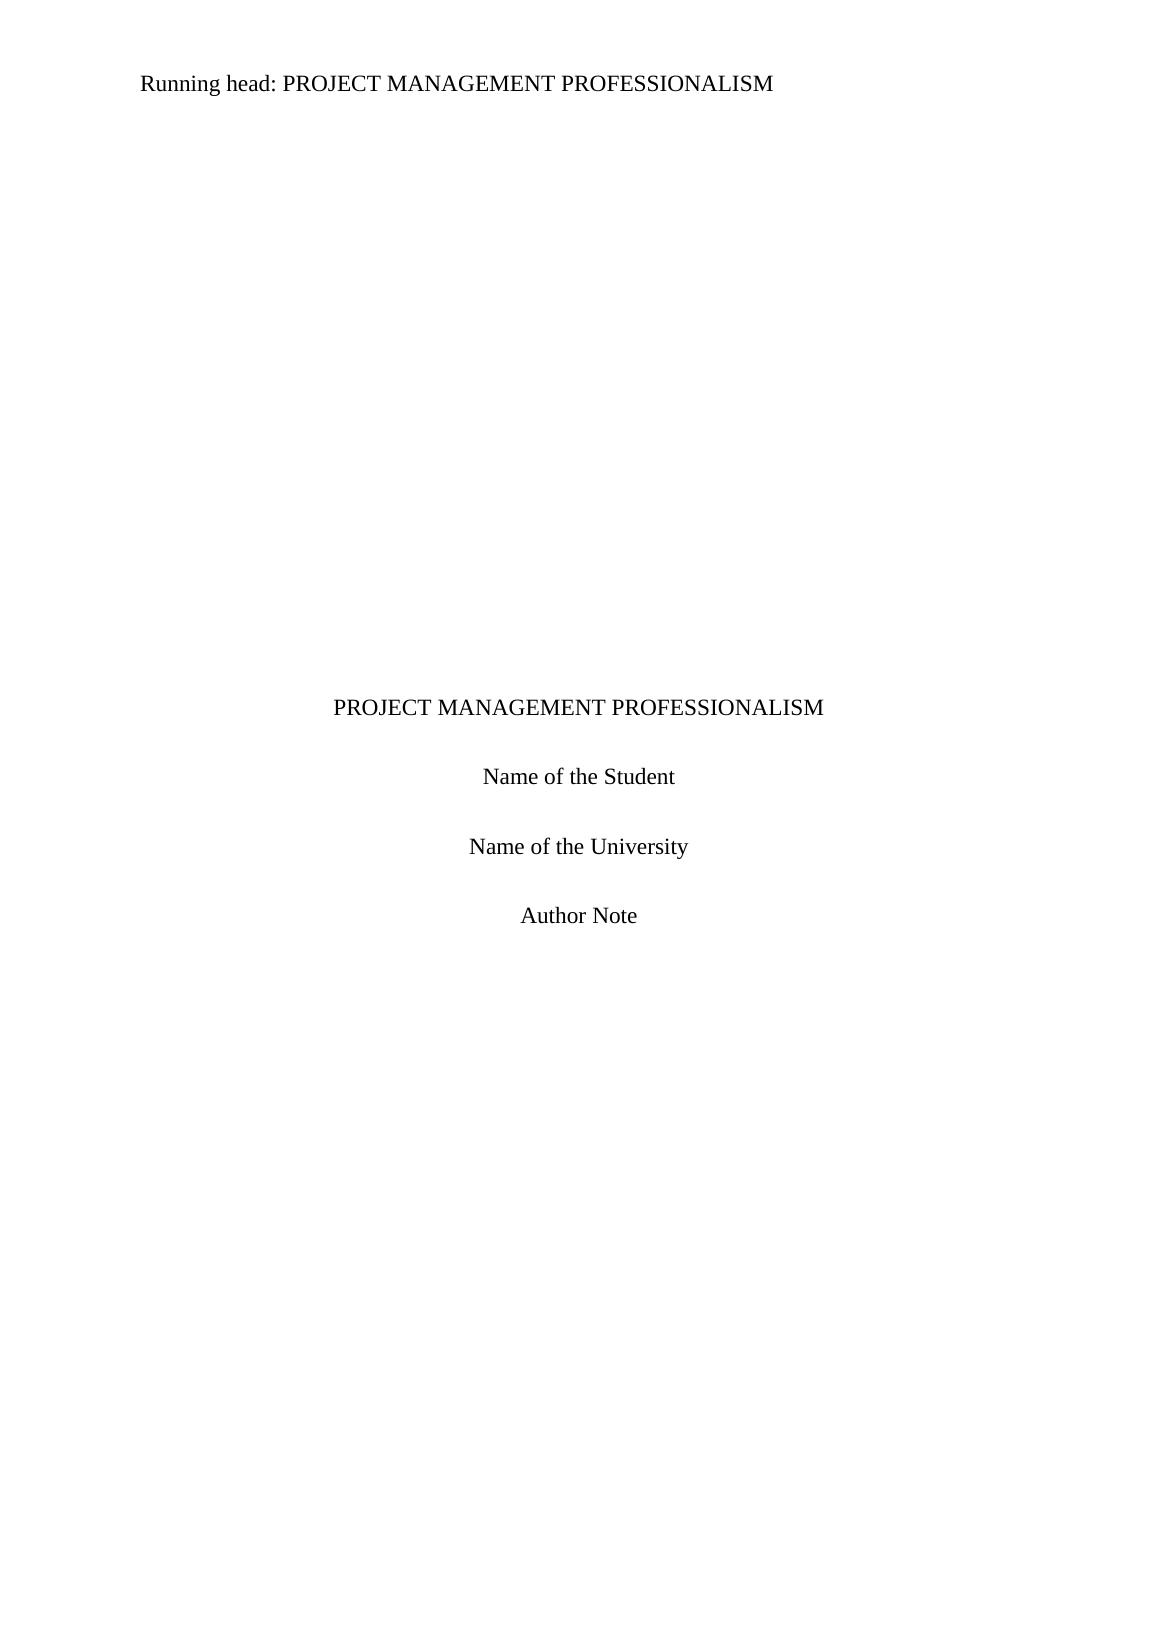 Project Management Professionalism_1